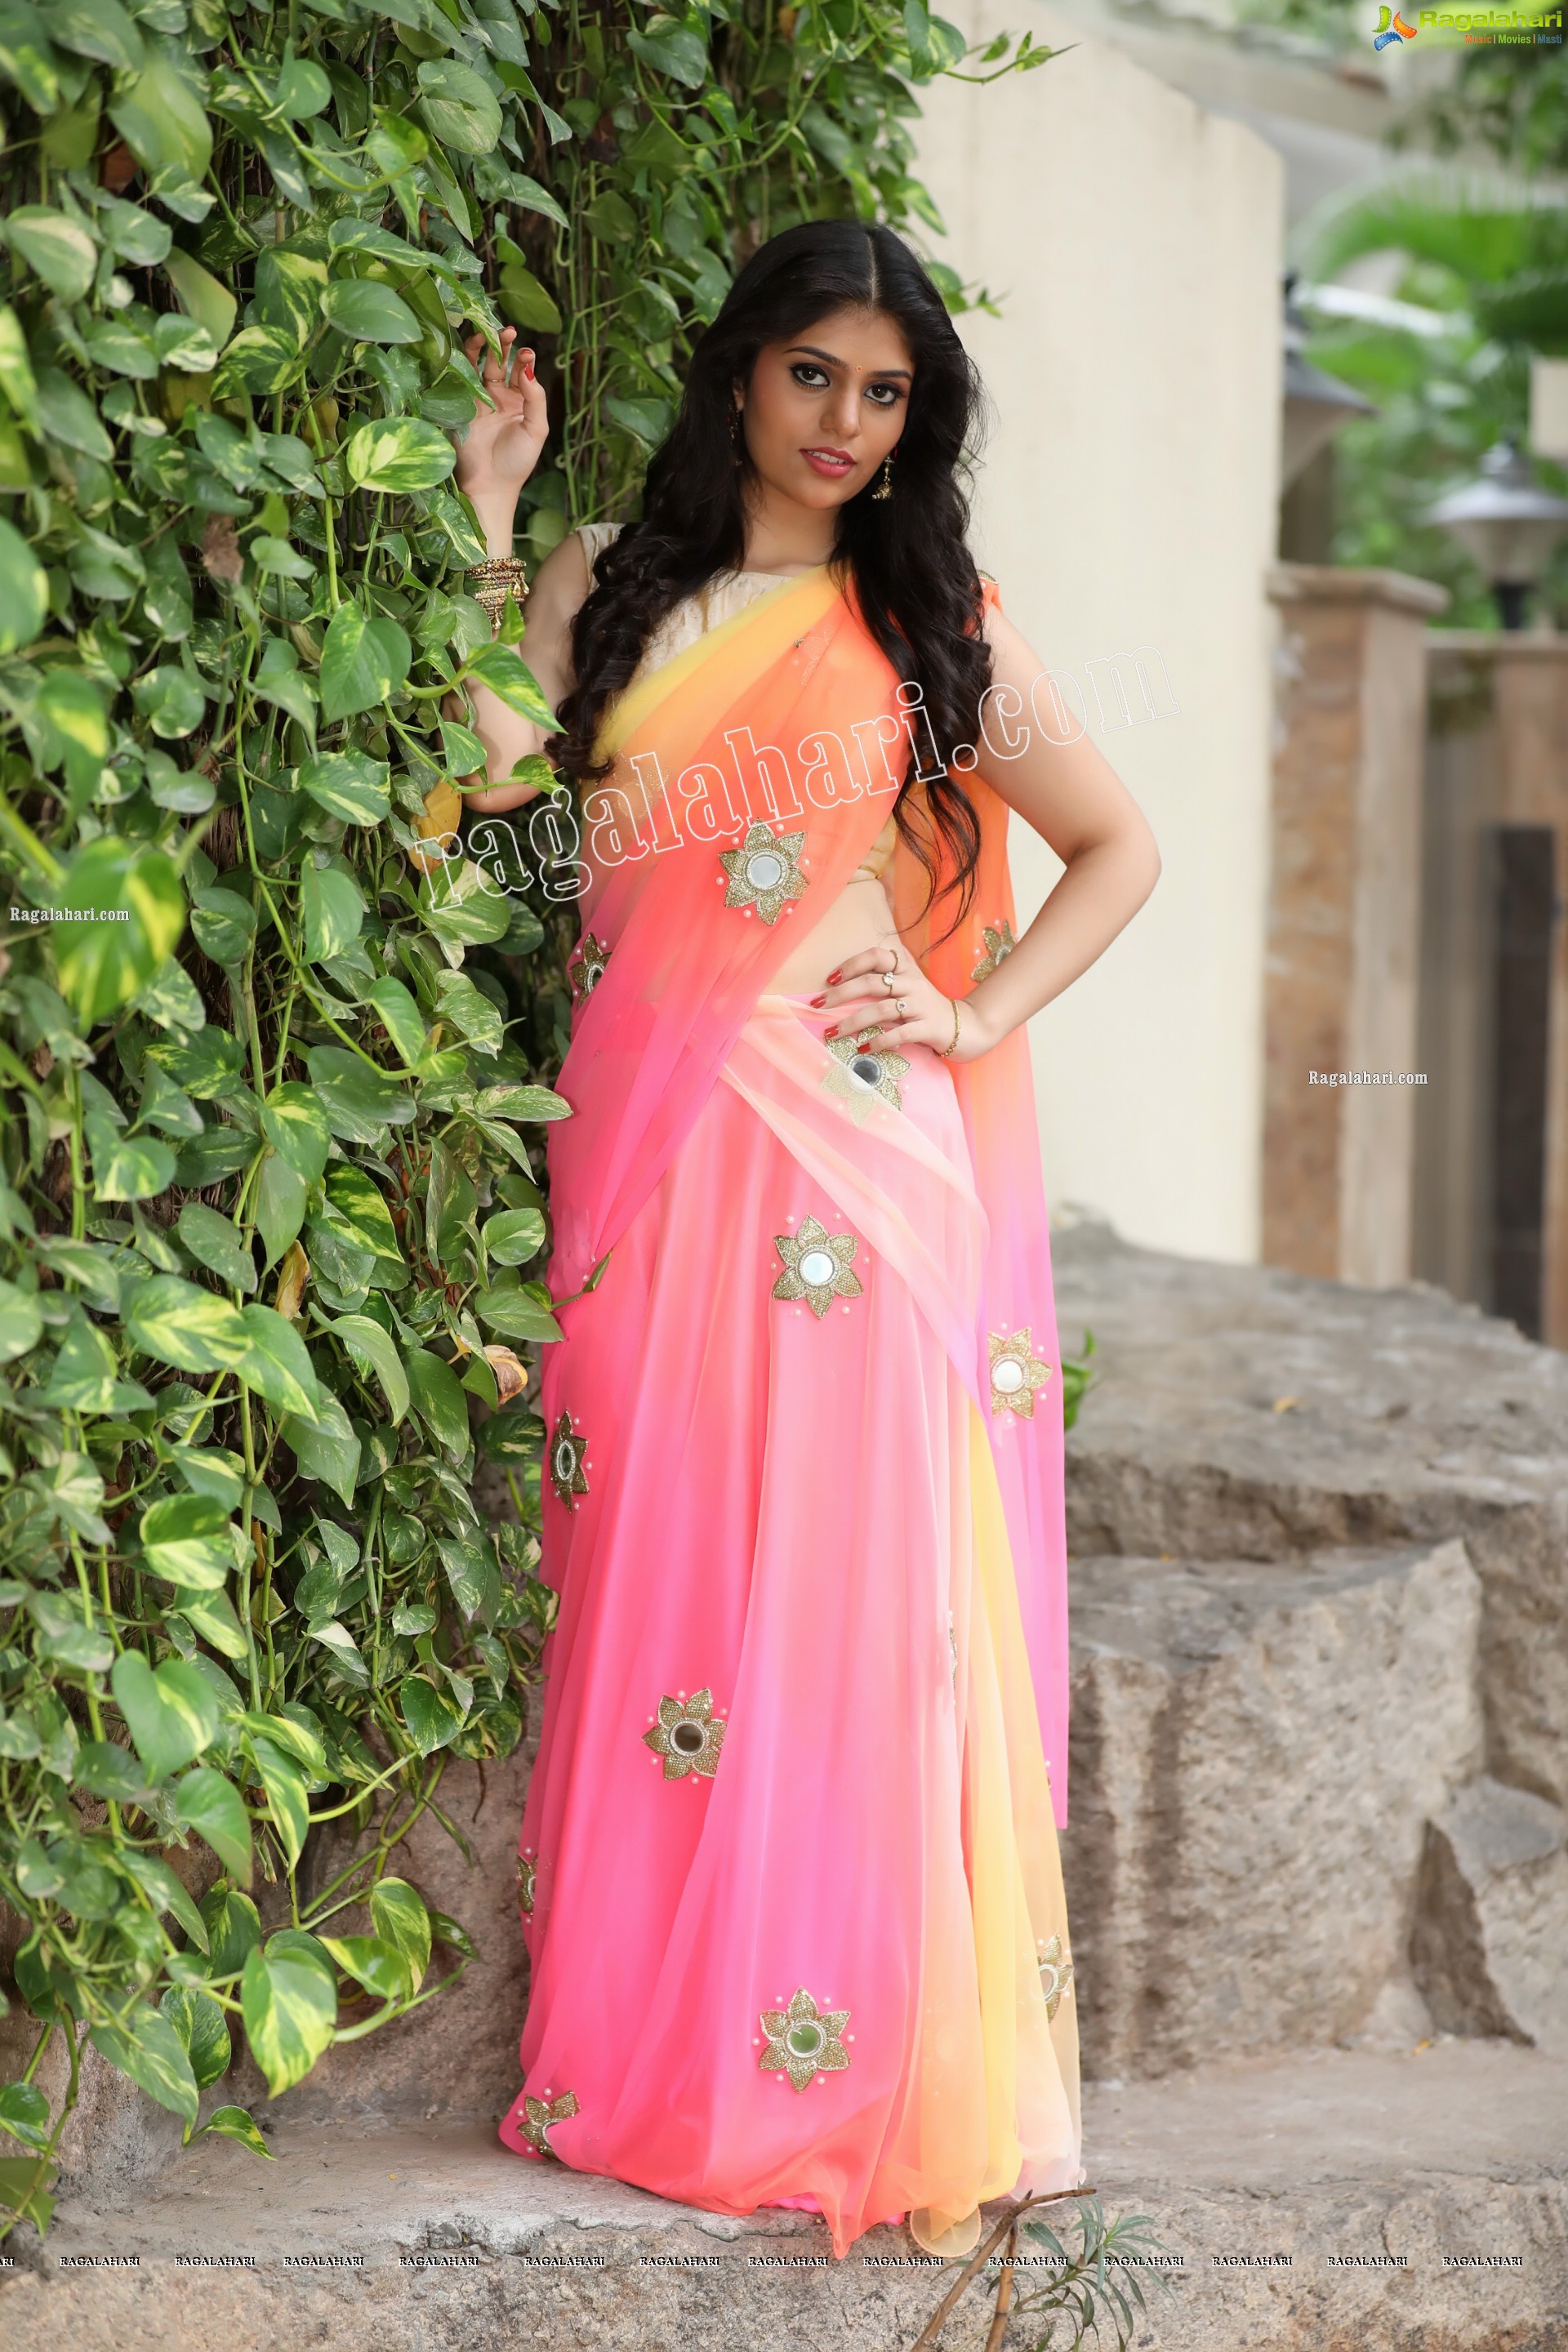 Viswa Sri Bandhavi in Pink and Orange Lehenga Choli Exclusive Photo Shoot